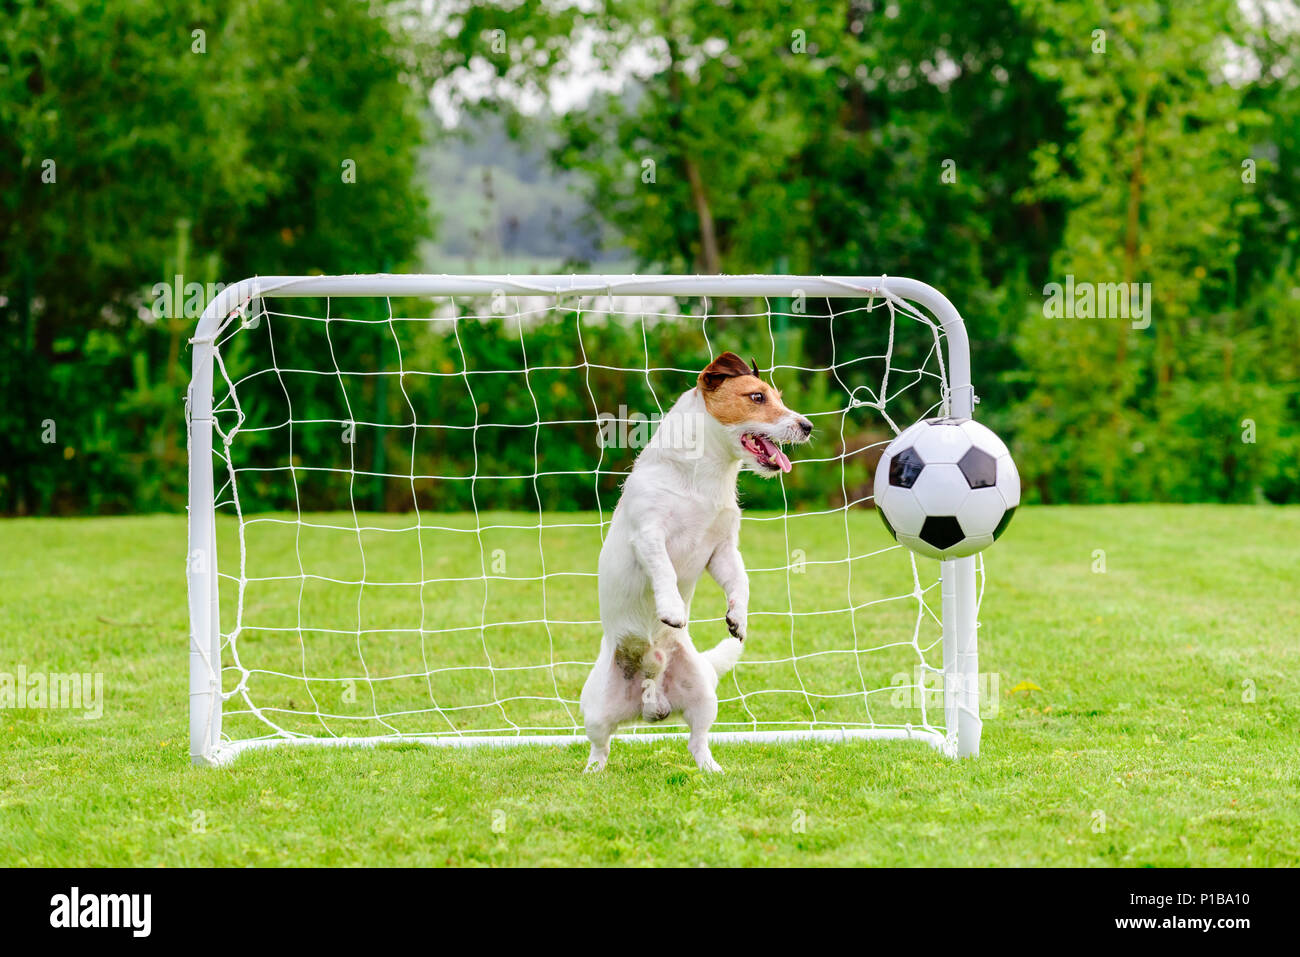 Dog as amusing football (soccer) player saves goal Stock Photo